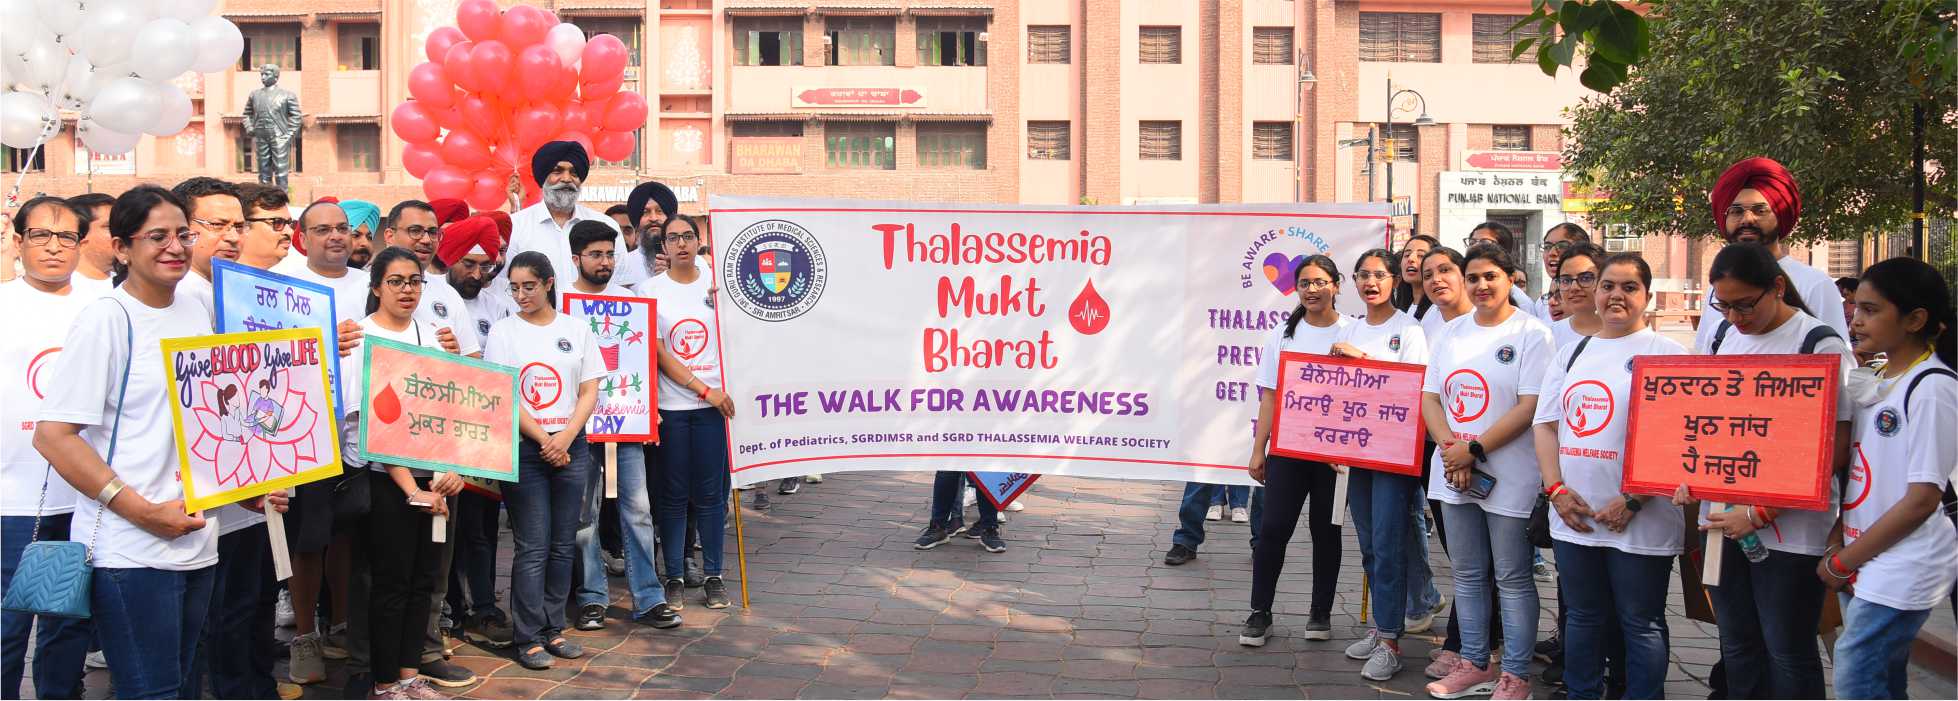 galimgs/Thalassemia Mukt Bharat Program Started/P - 18.jpg